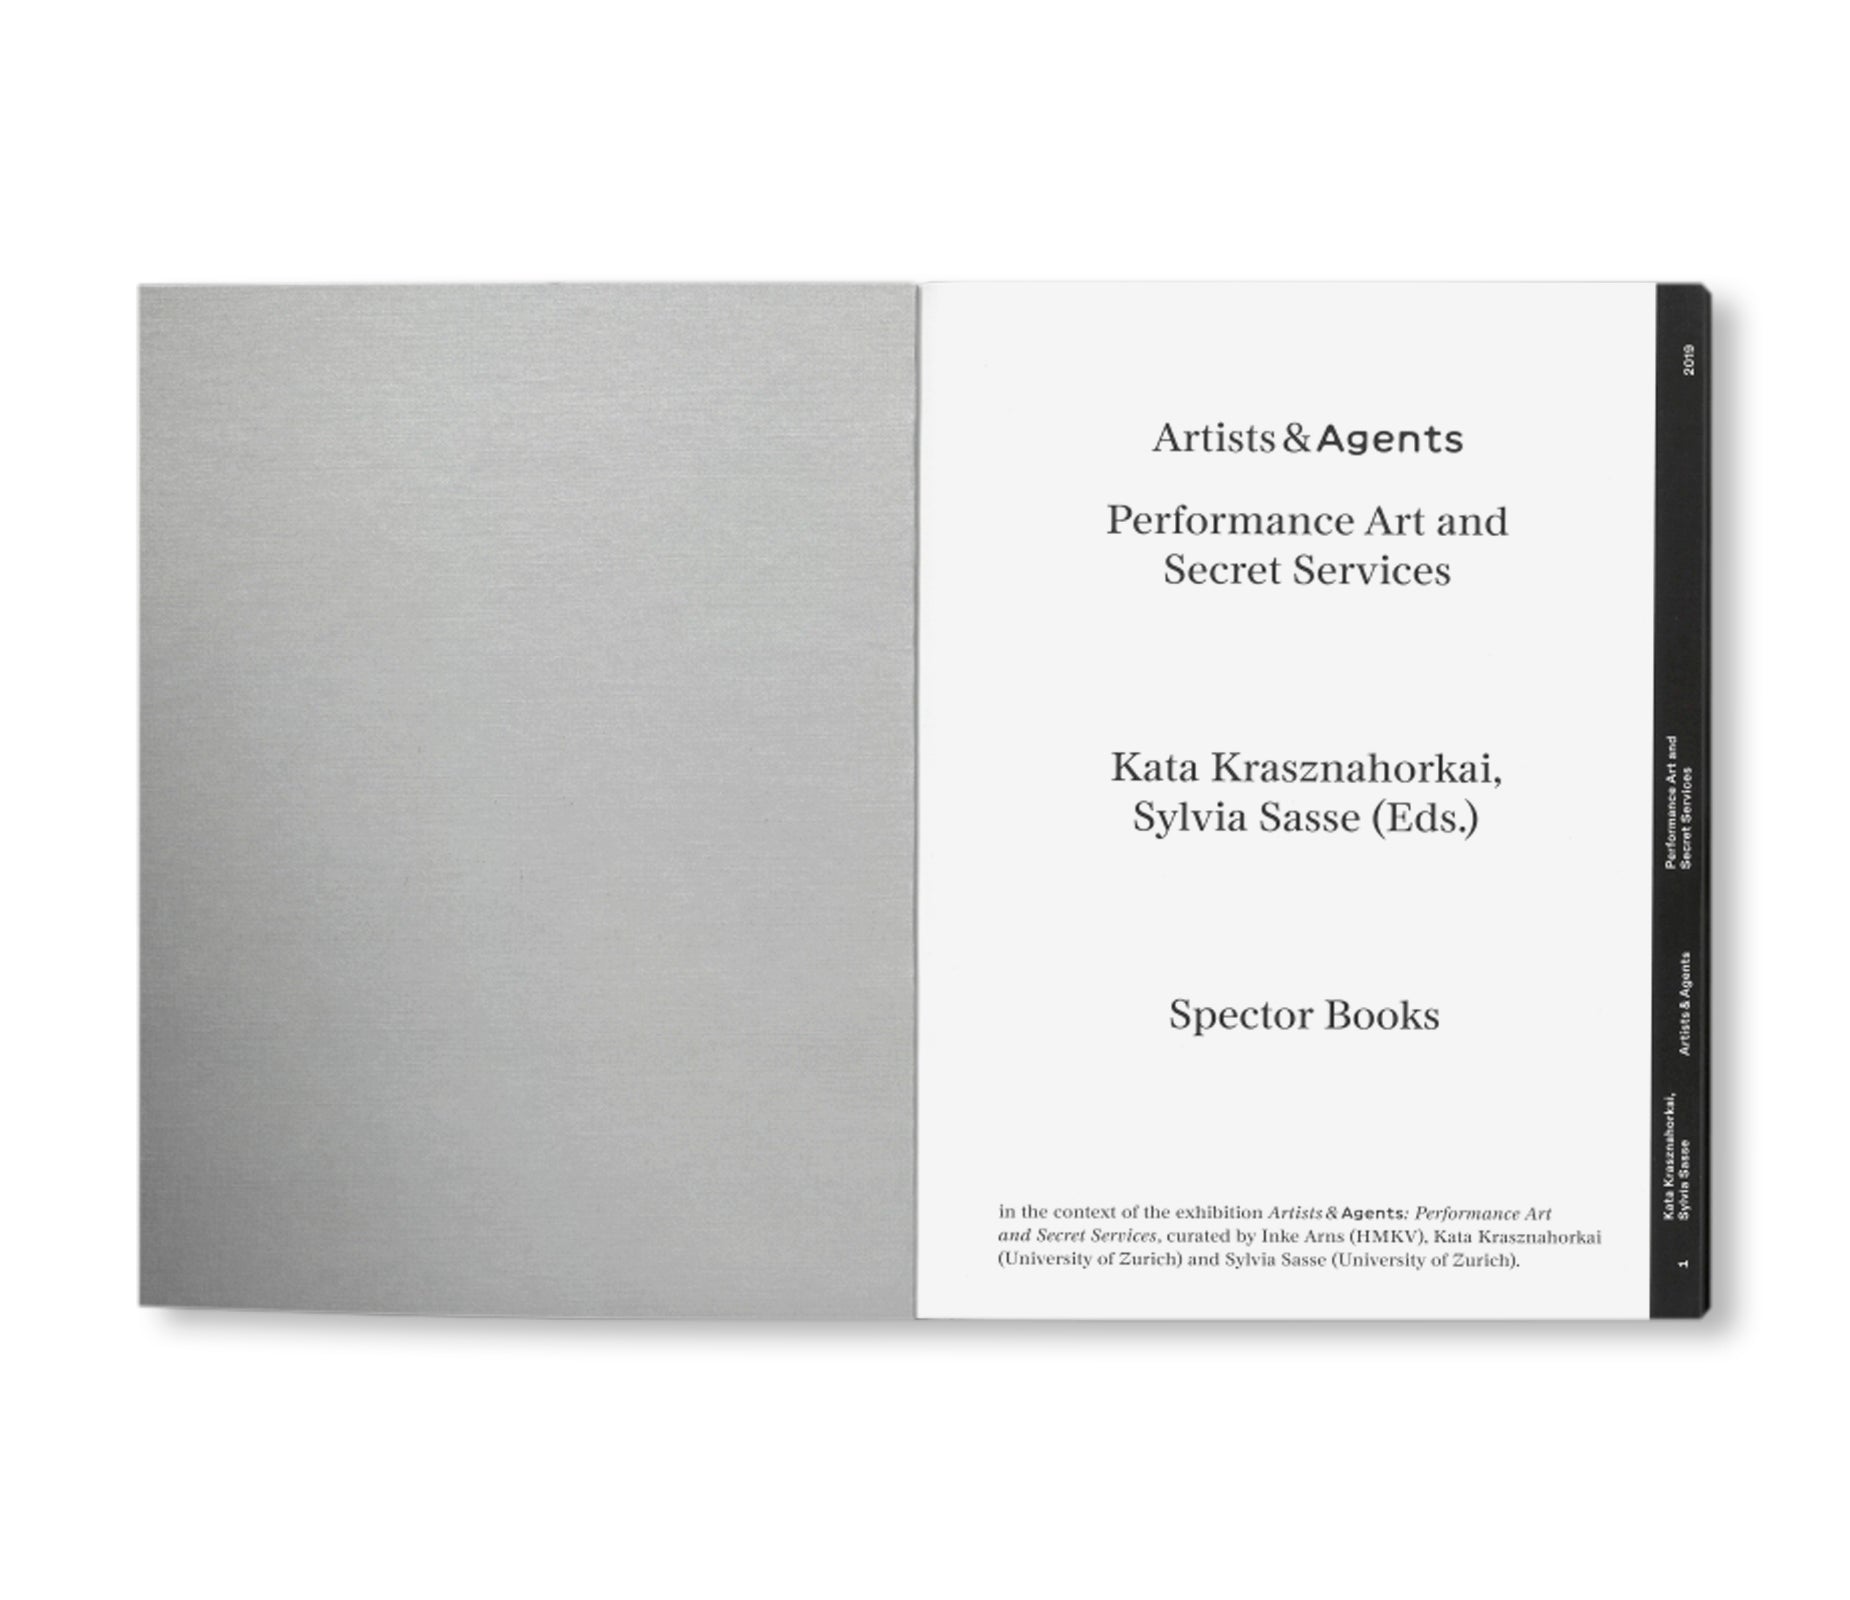 ARTISTS & AGENTS: PERFORMANCE ART AND SECRET SERVICES by Sylvia Sasse, Kata Krasznahorkai